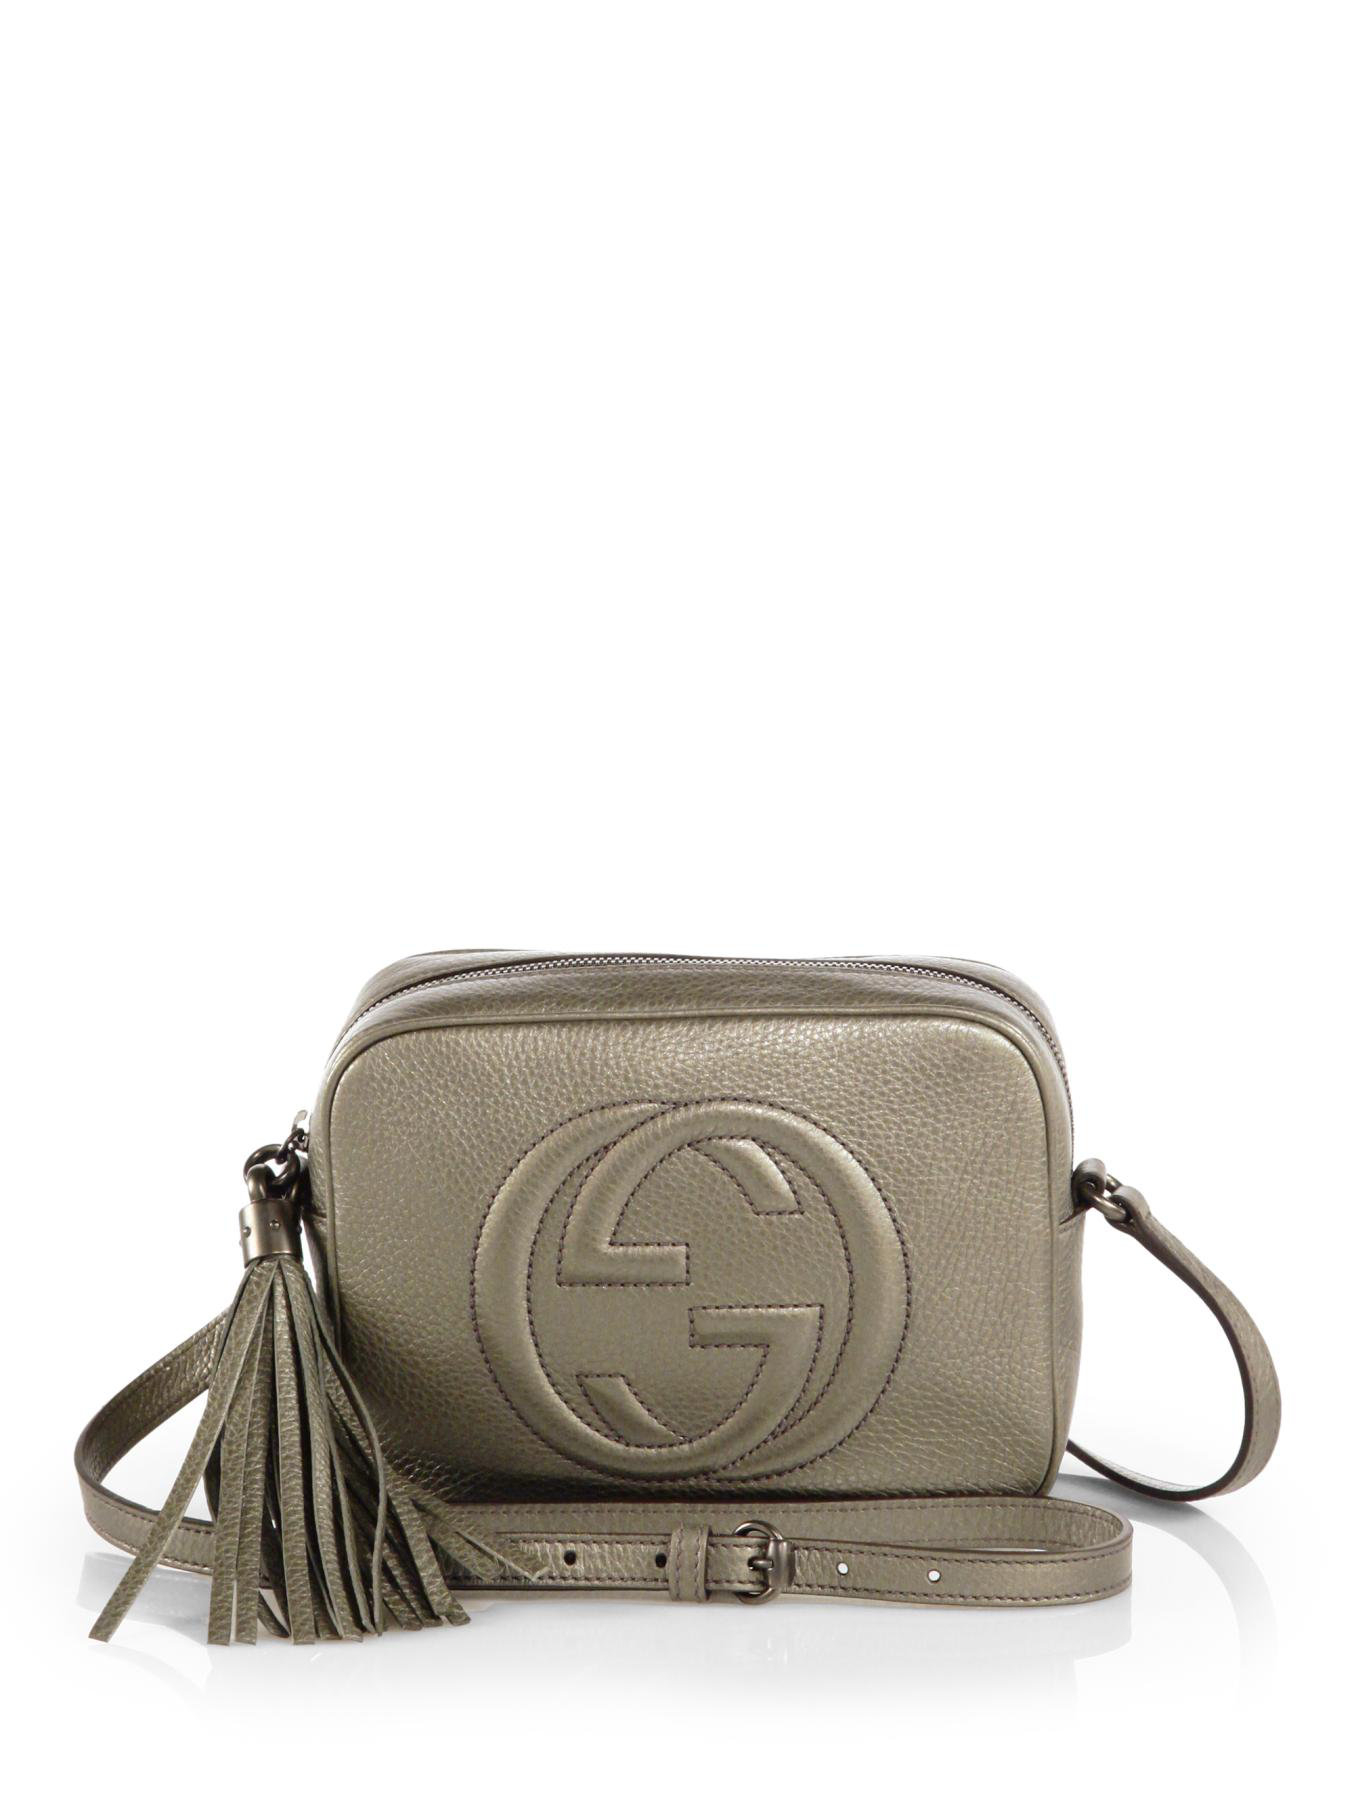 Gucci Soho Metallic Leather Disco Bag | Lyst